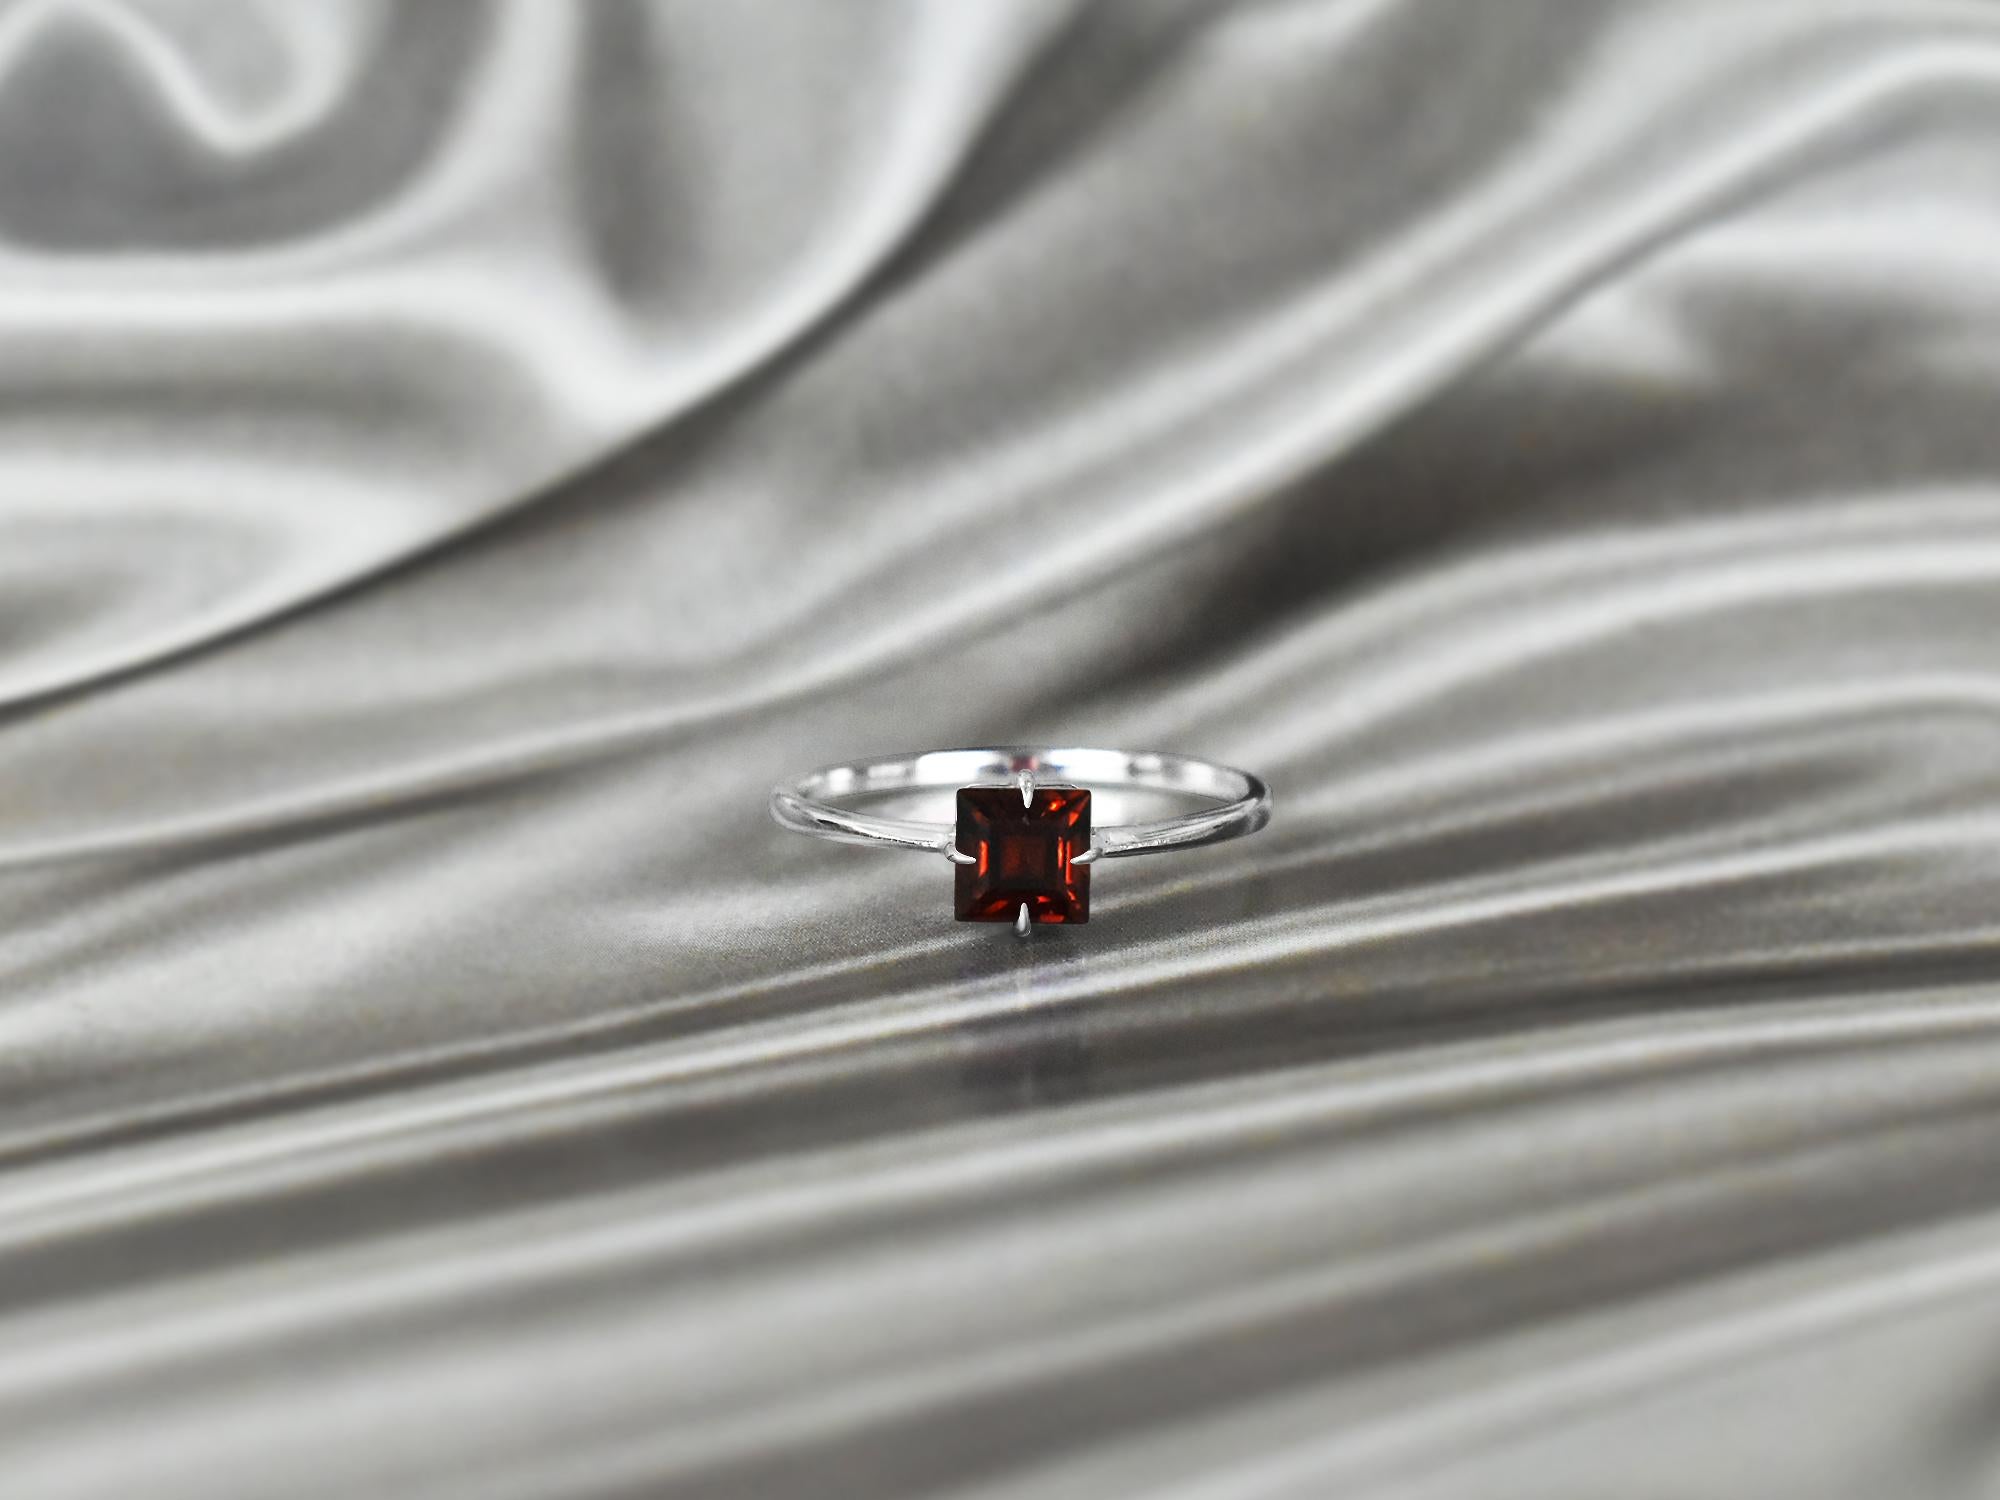 For Sale:  10k Gold Princess Cut 5x5 mm Princess Cut Gemstone Ring Gemstone Engagement Ring 5